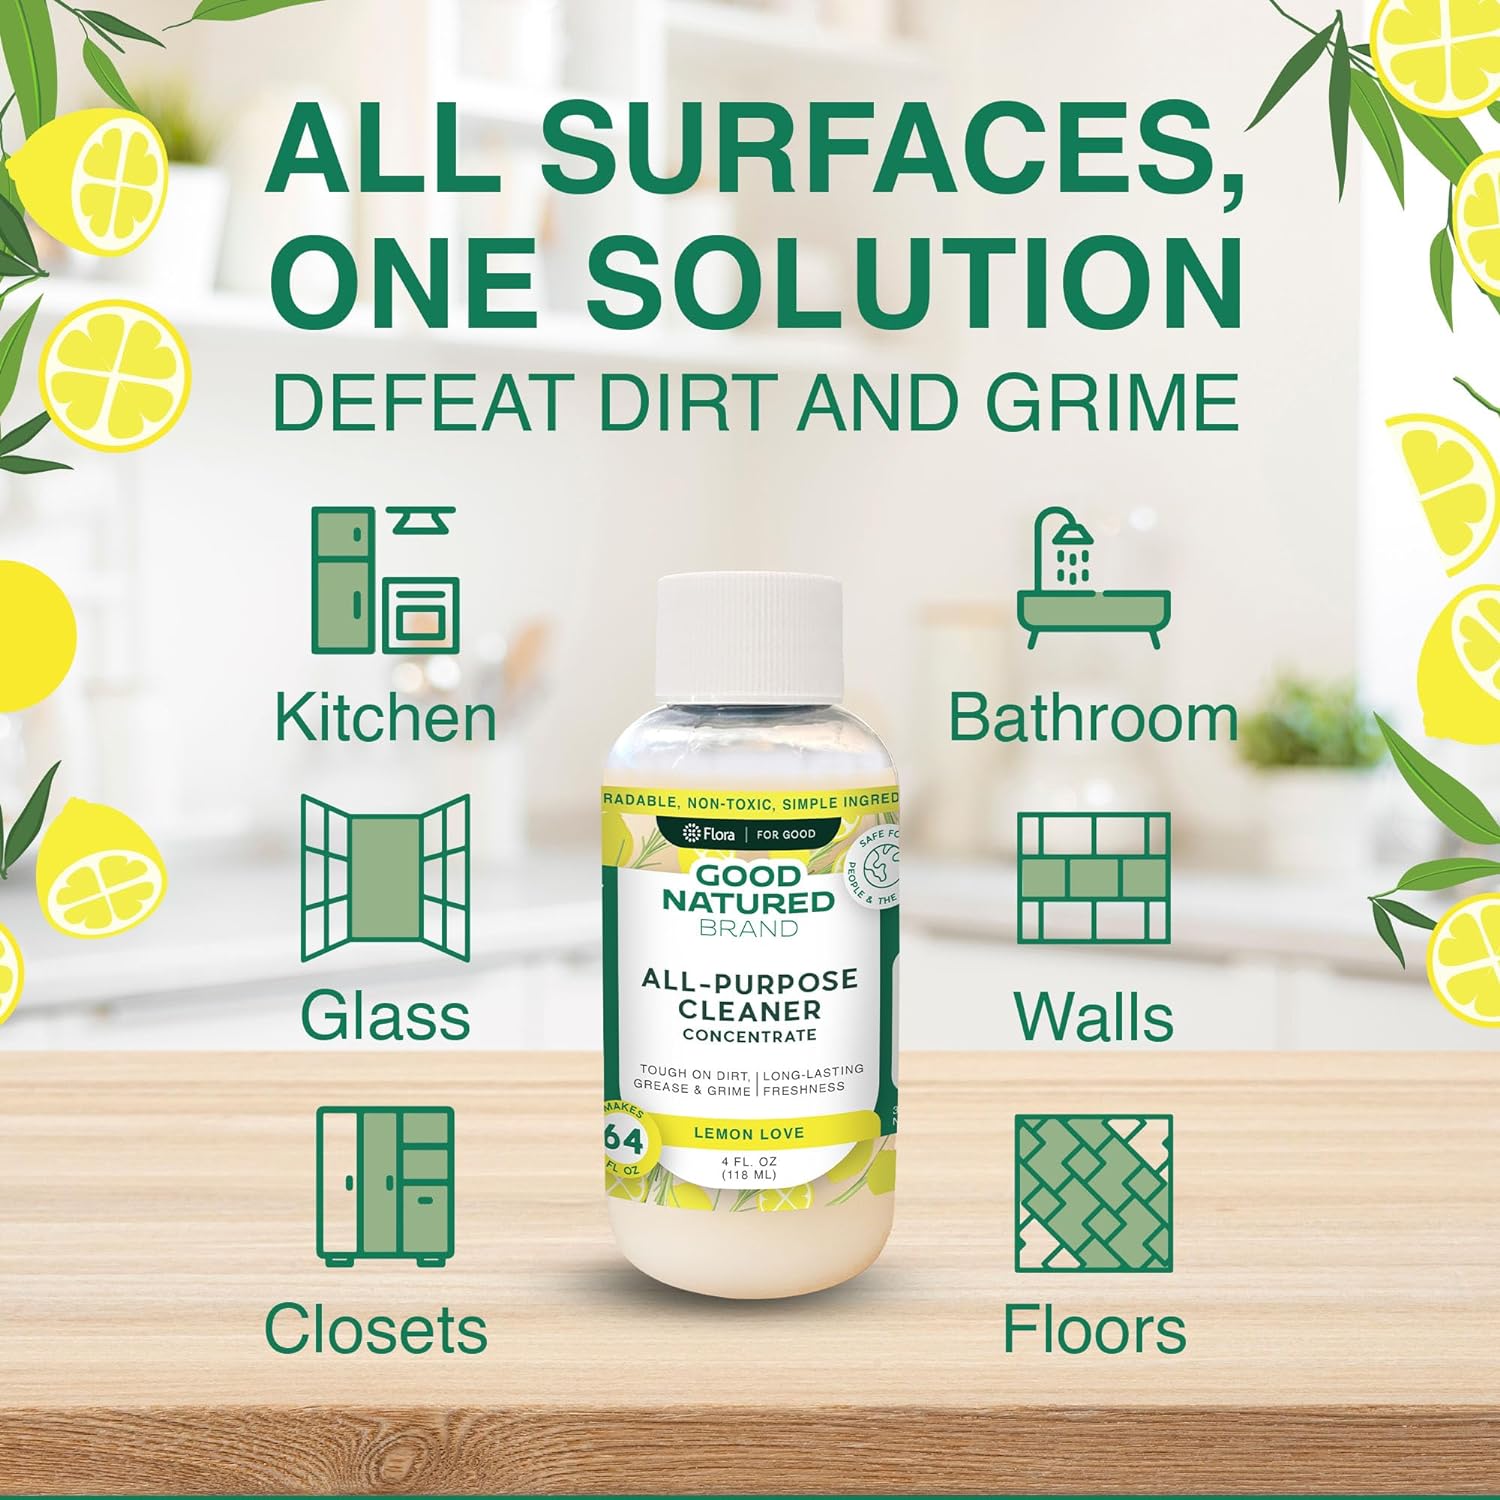 All-Purpose Cleaner Concentrate - Lemon Love | 4 fl oz makes 64 fl oz